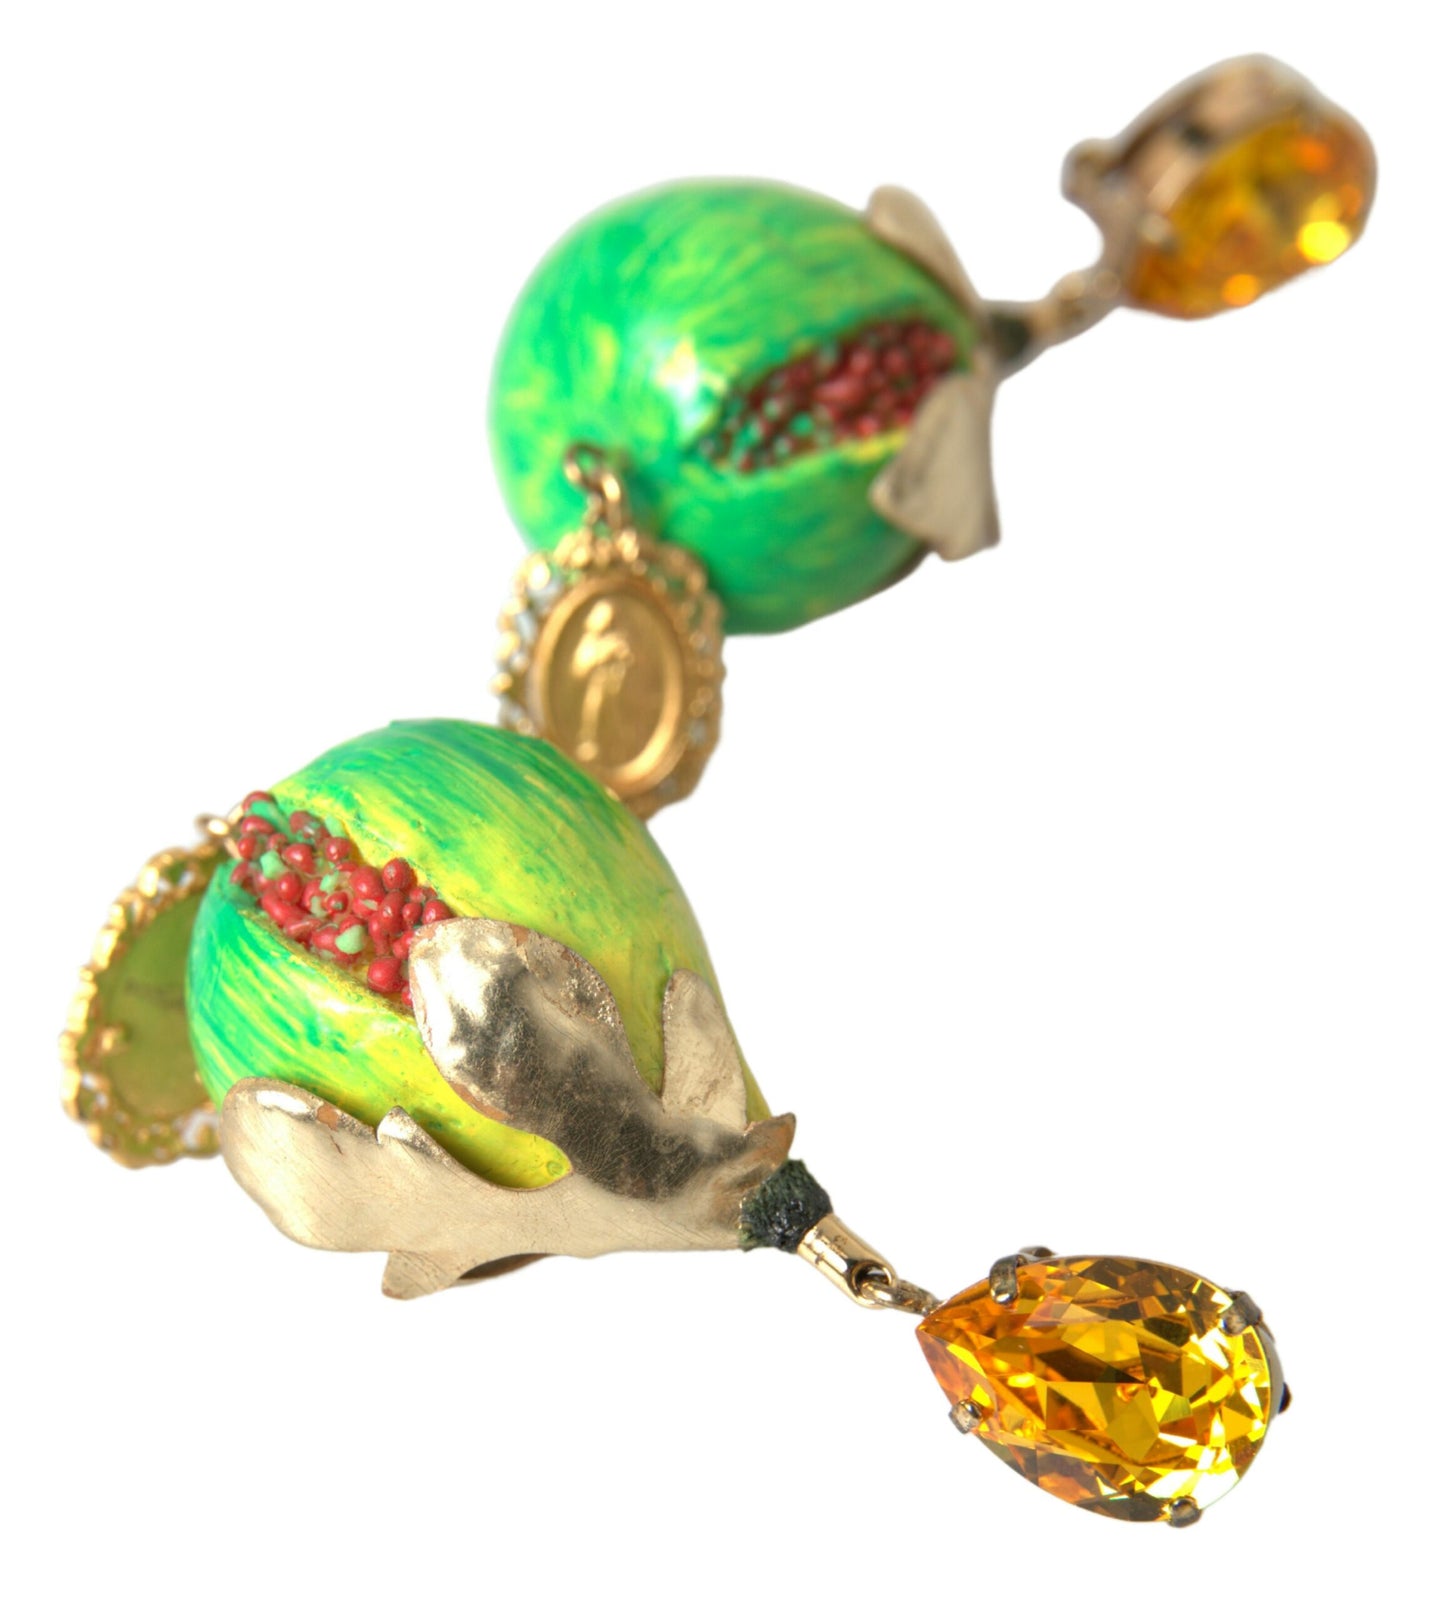 Green Fig Crystal Dangle Earrings